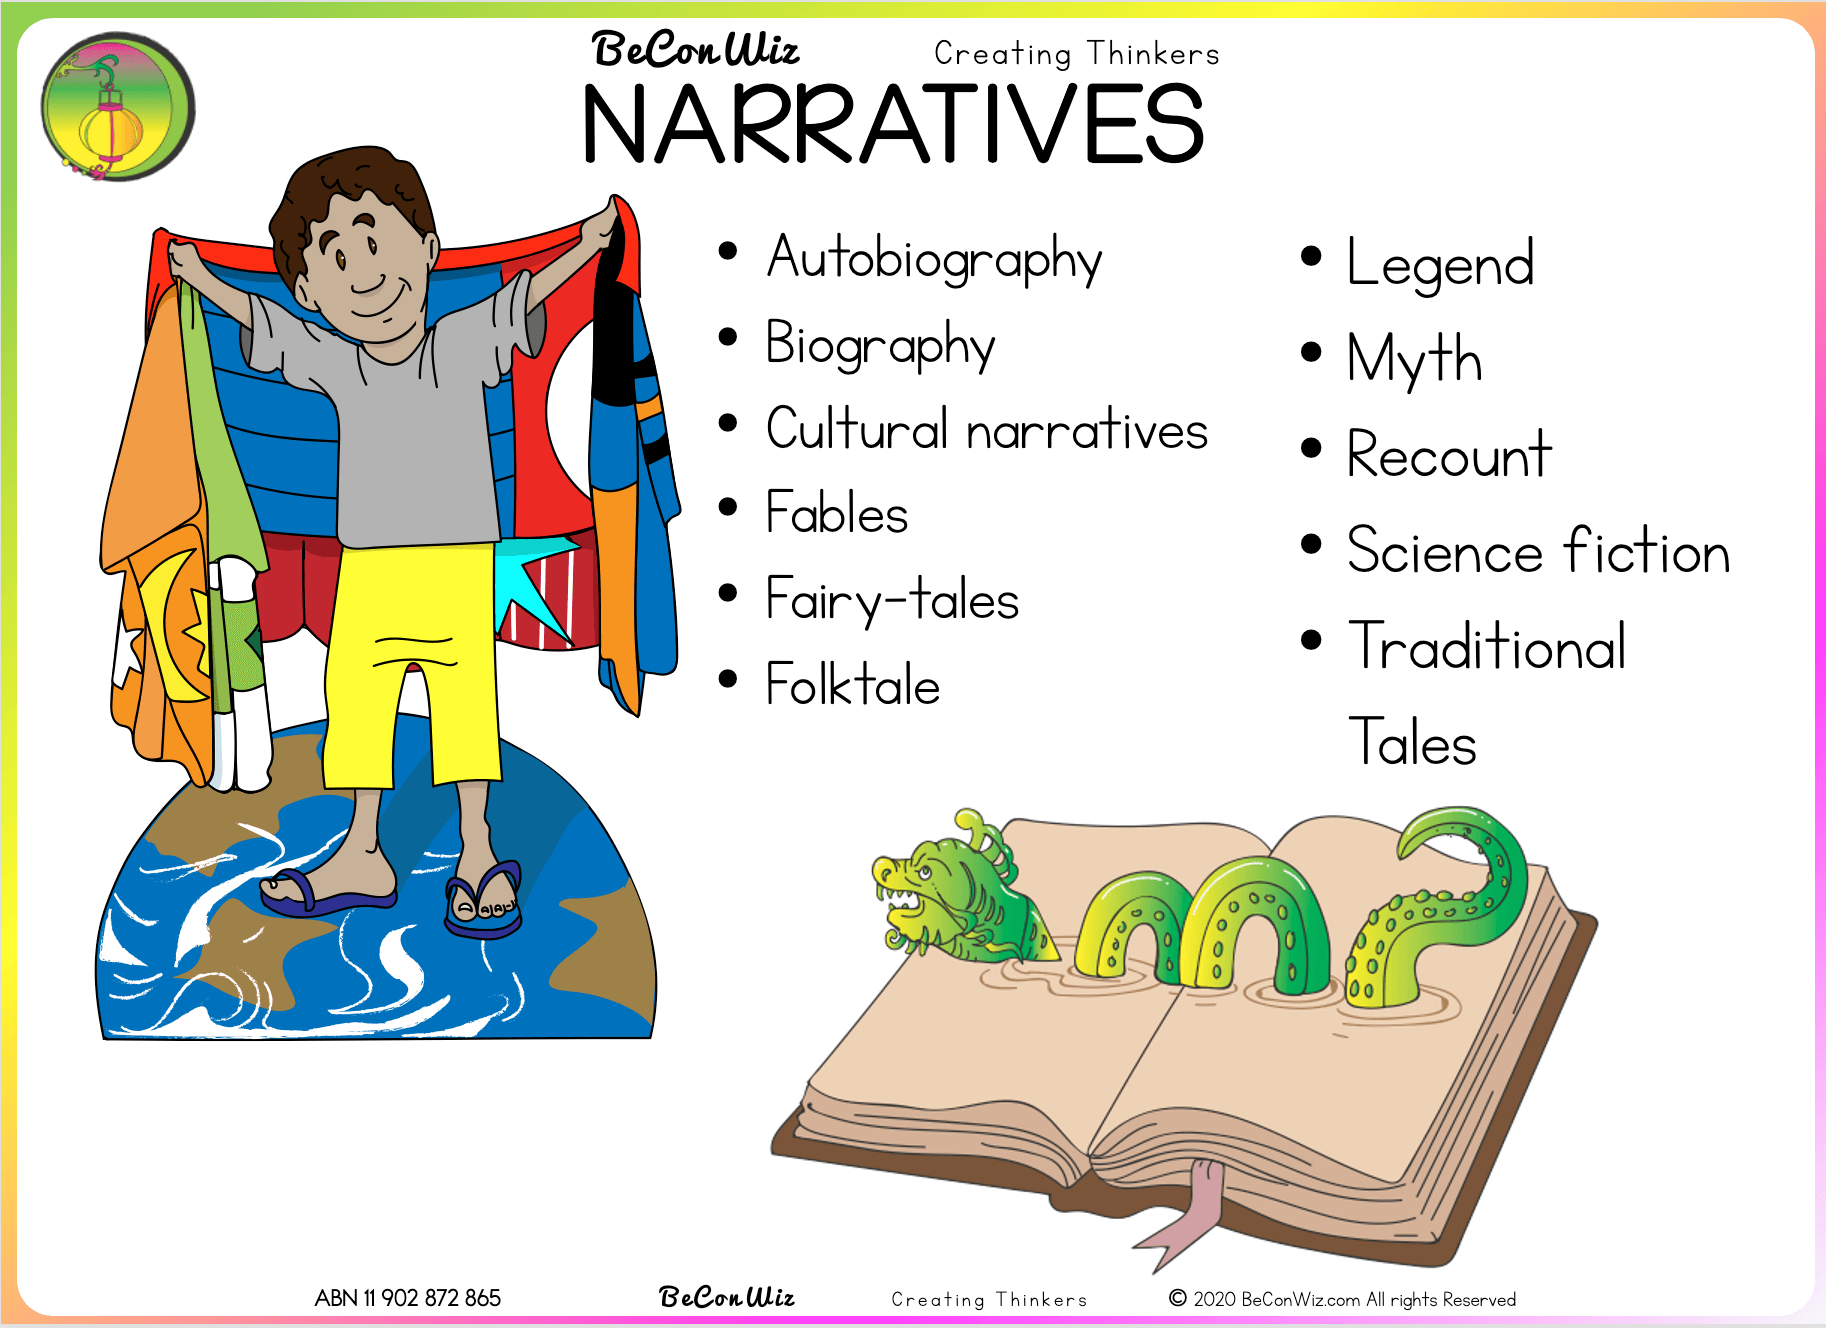 types of narrative presentation